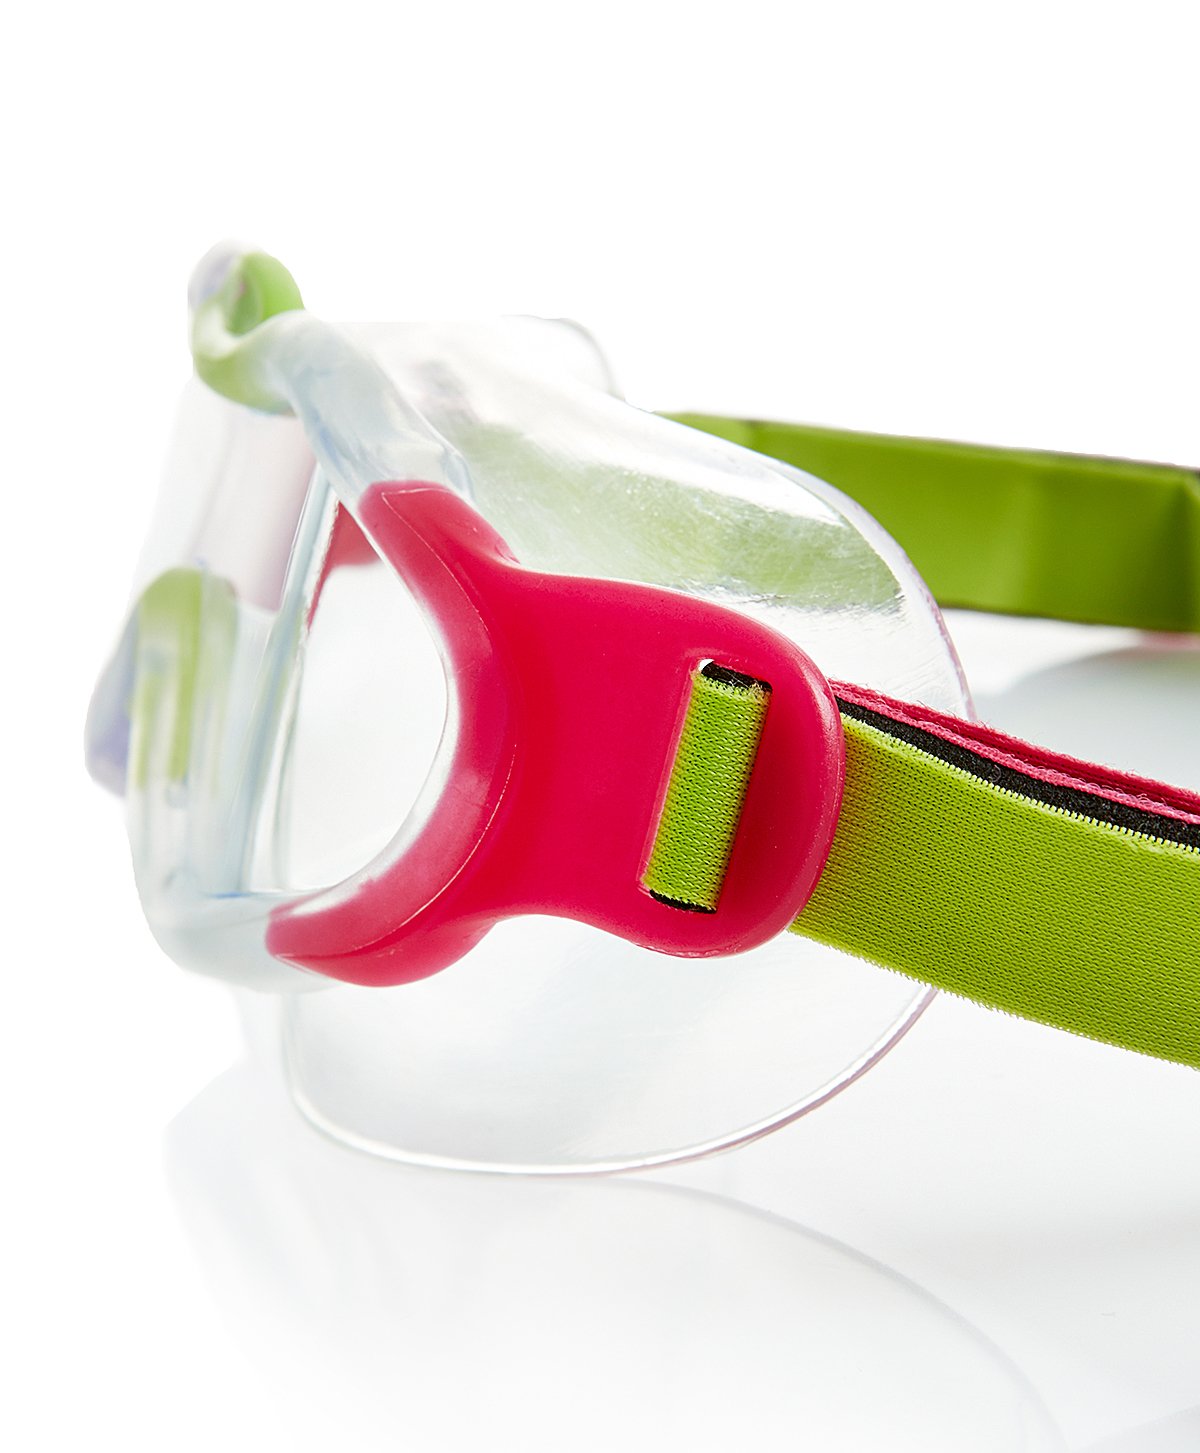 Speedo Tots Sea Squad Mask Goggles - Pink/Green - Best Price online Prokicksports.com